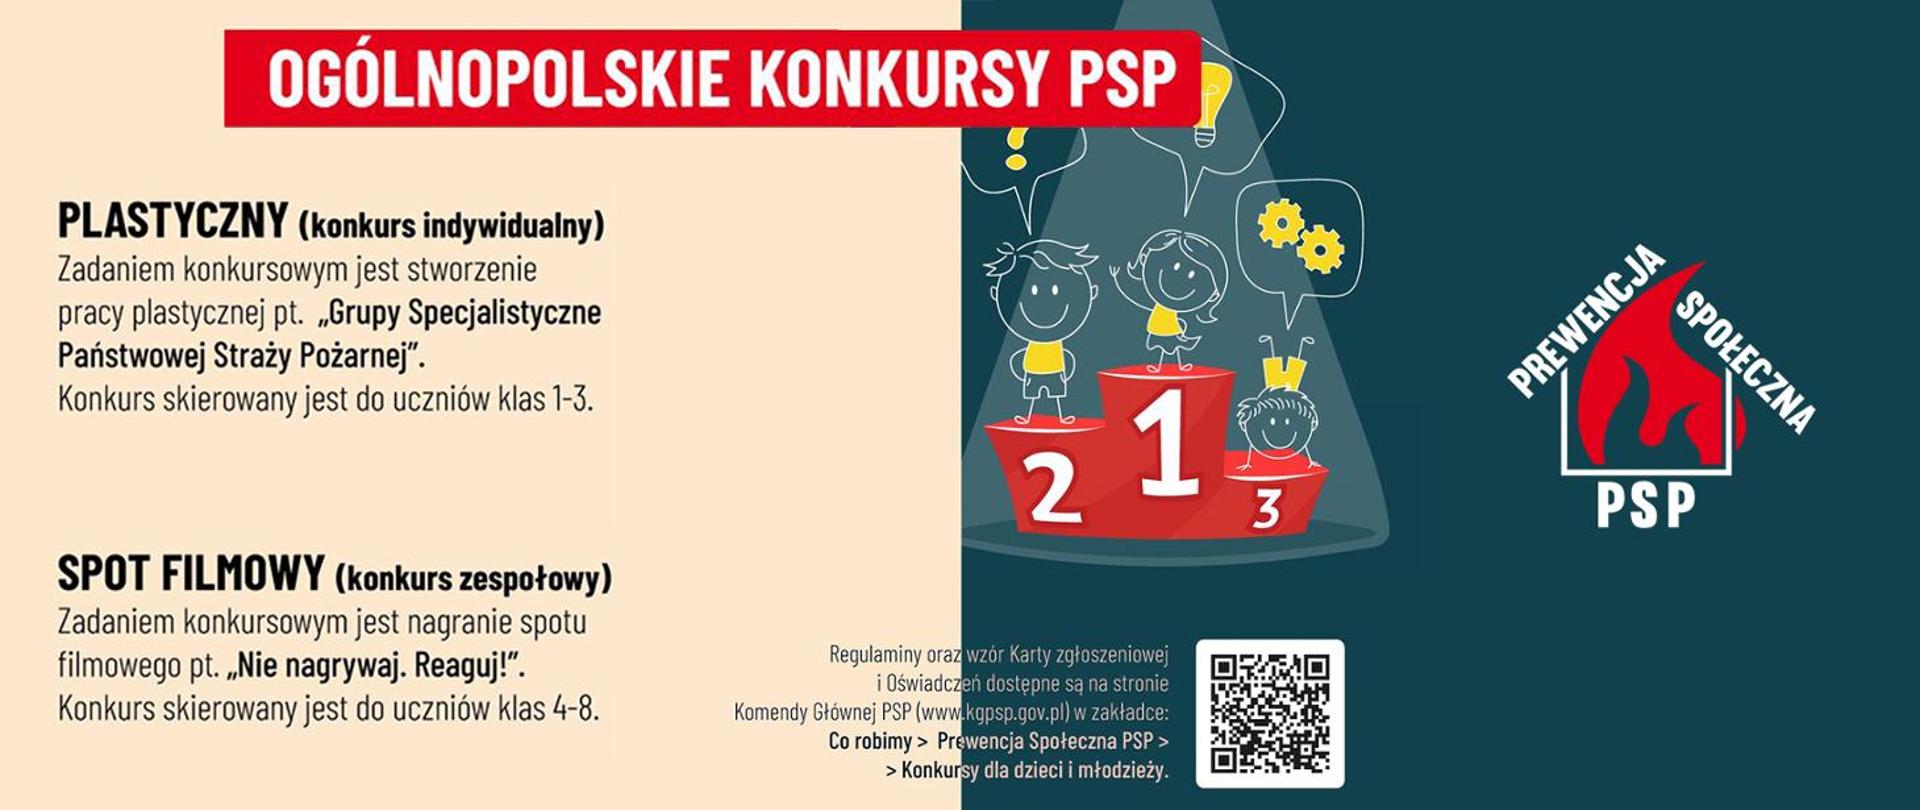 Ogólnopolskie konkursy PSP